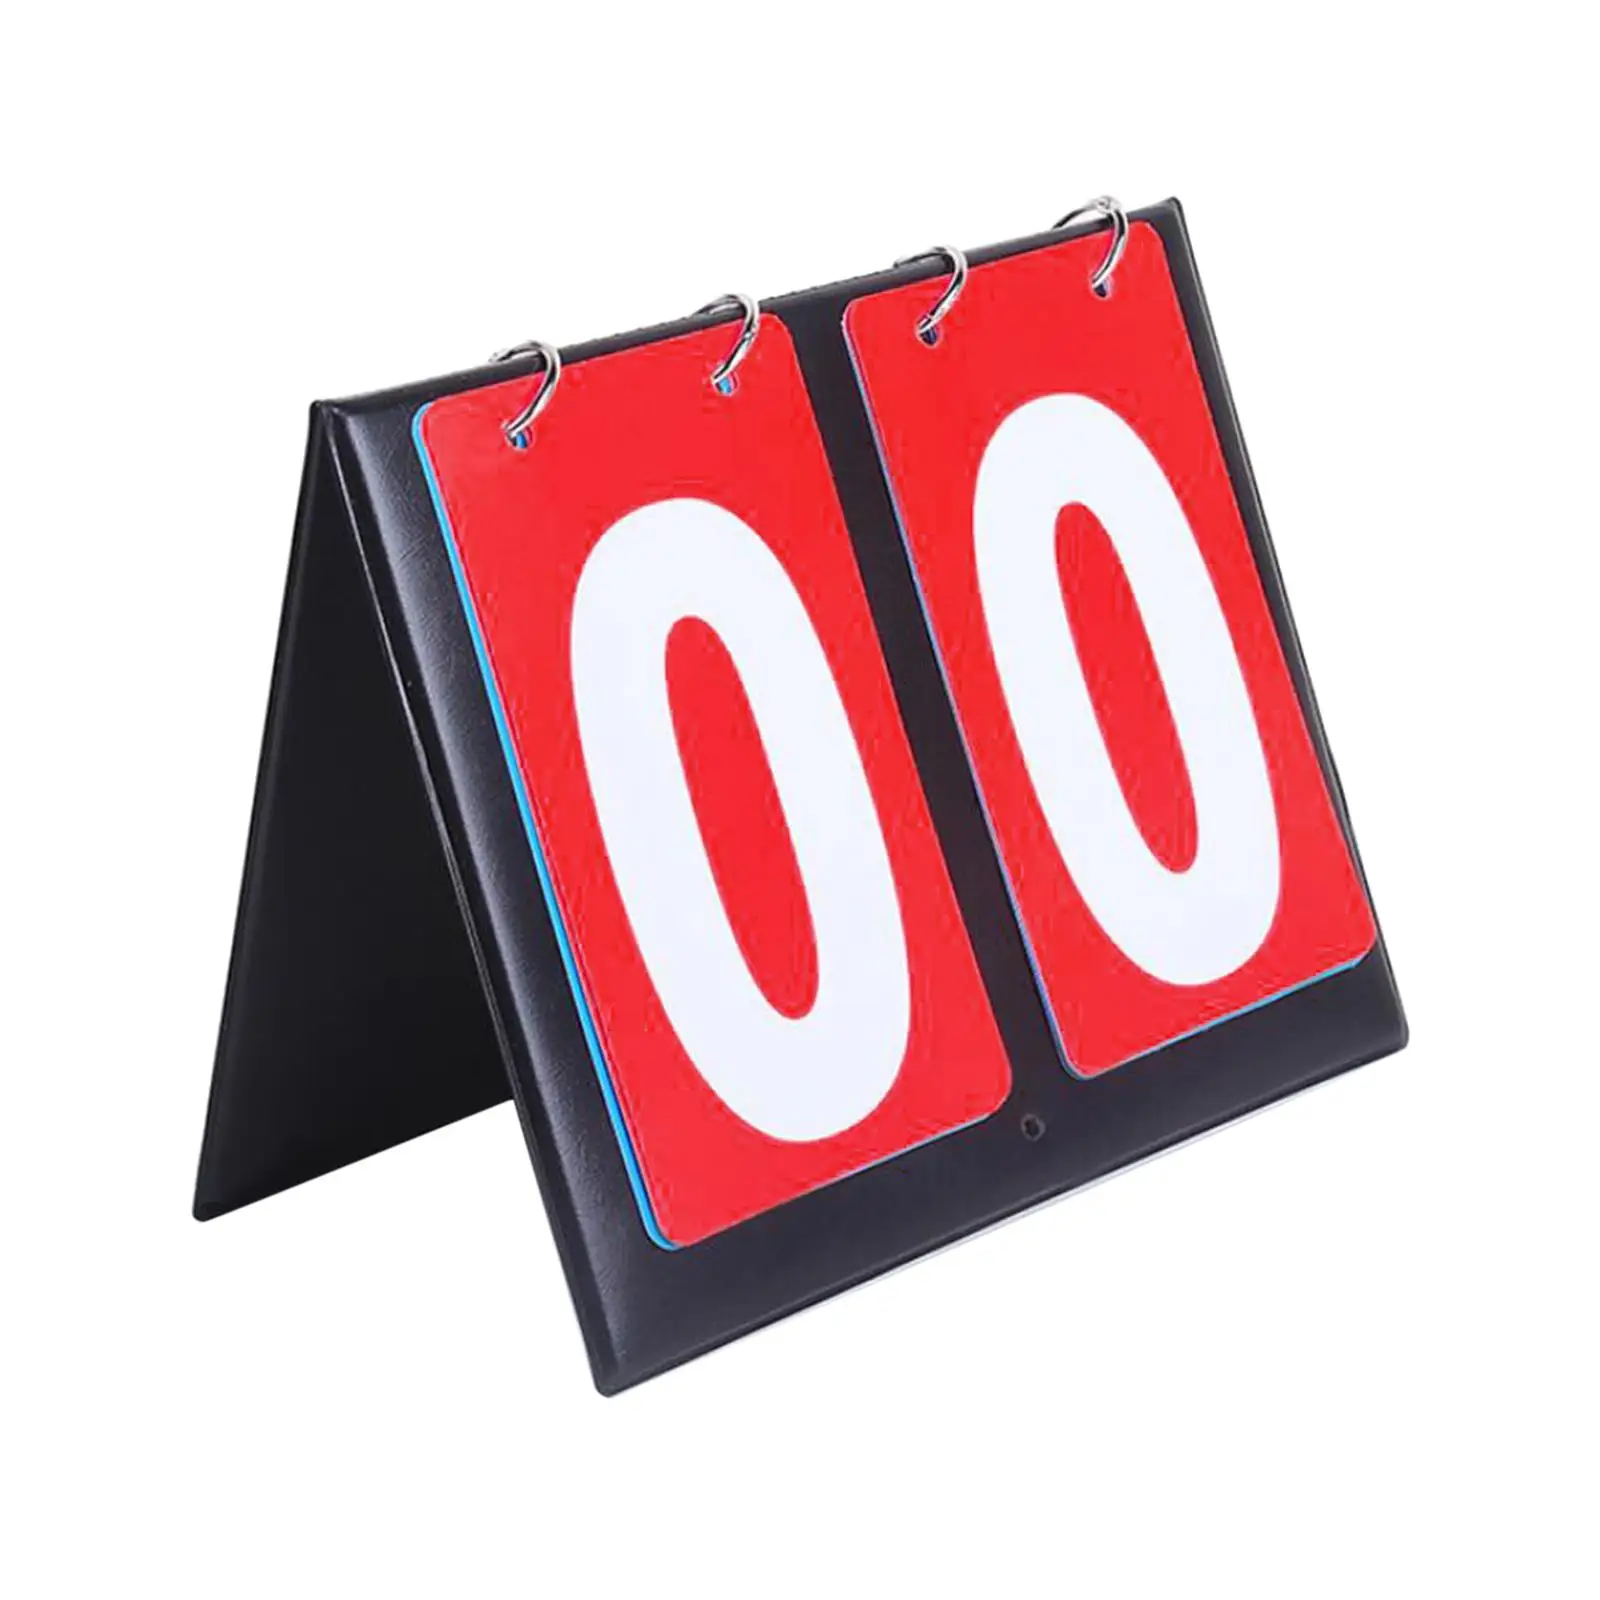 Multipurpose Table Scoreboard, Flips up Removable Portable 2 digits Score Keeper